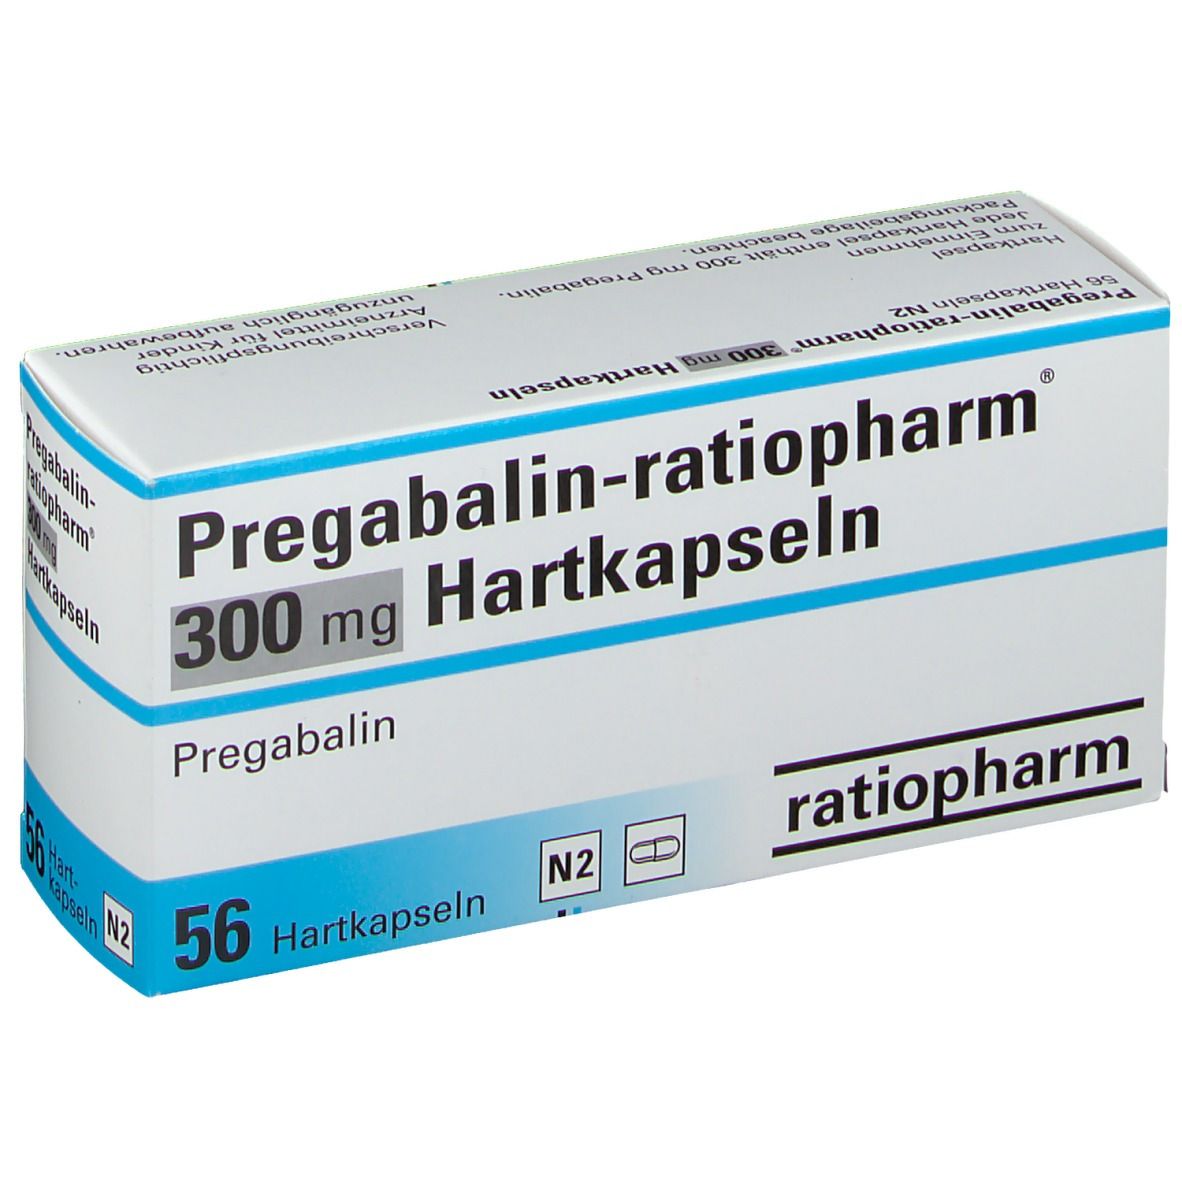 Pregabalin-ratiopharm® 300 mg